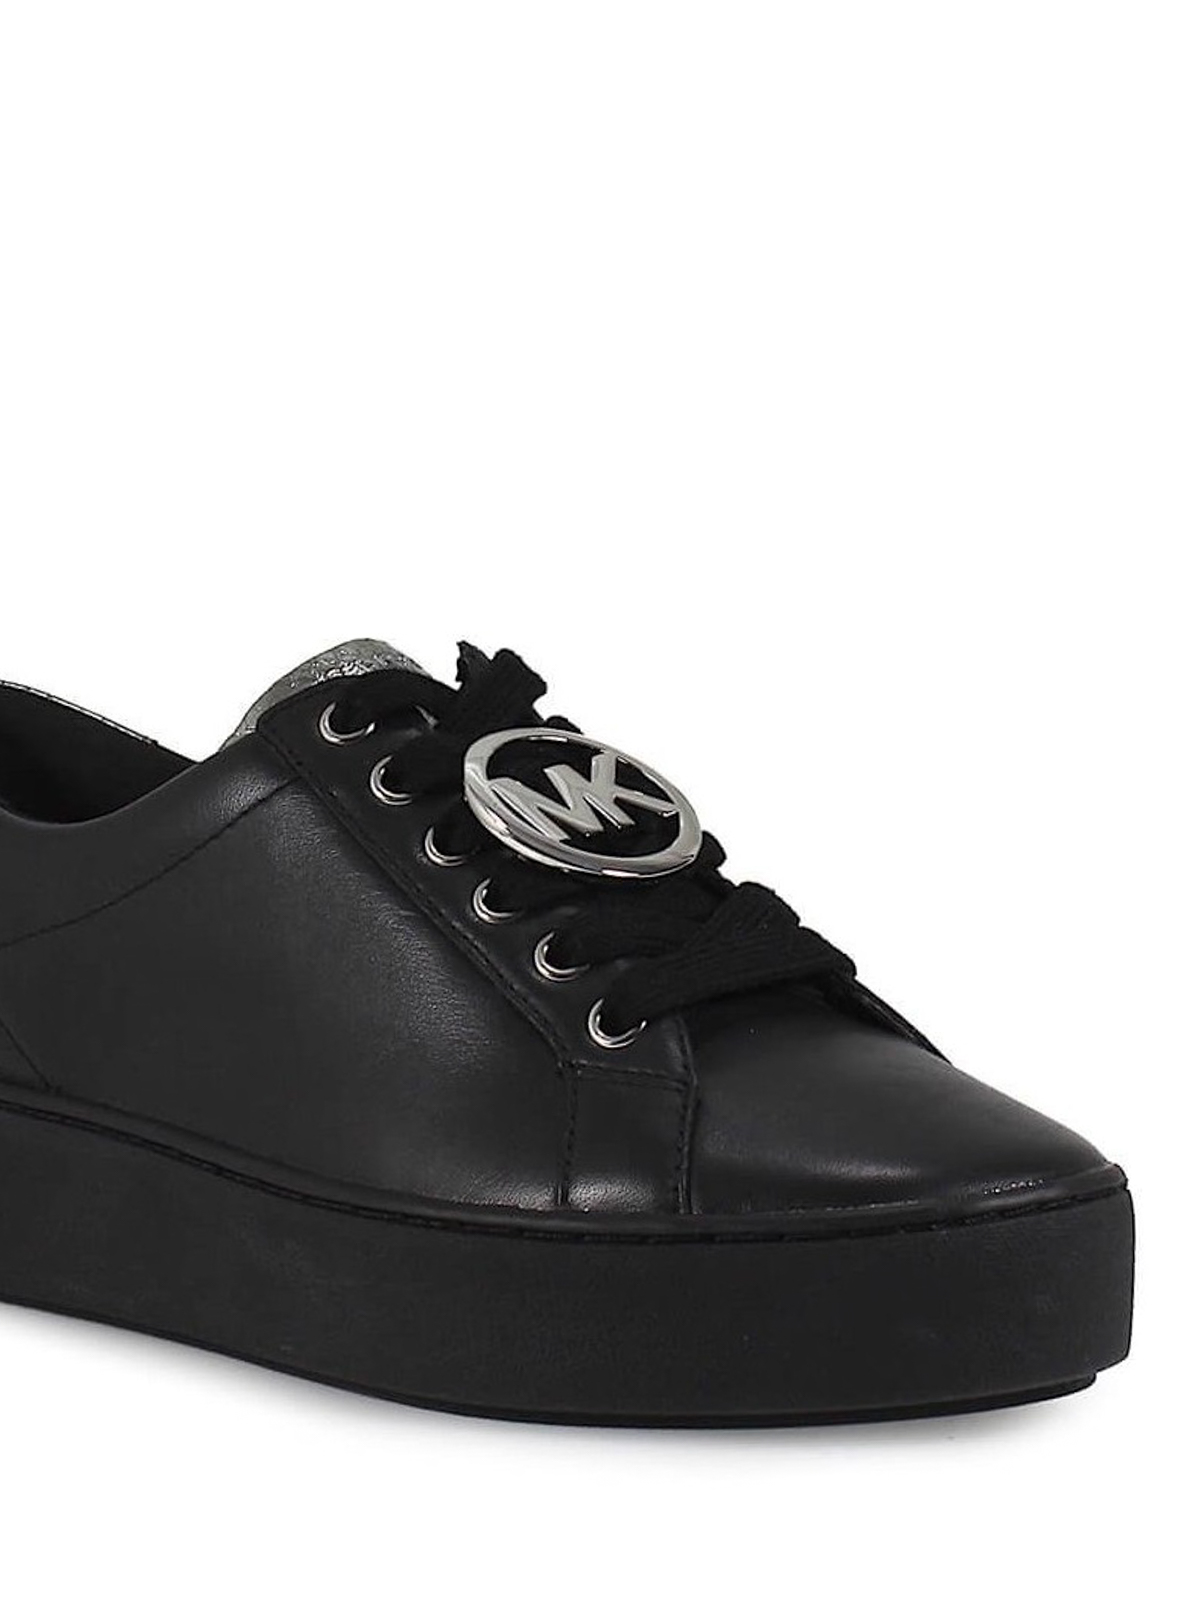 Trainers Michael Kors - Poppy black leather sneakers - 43R8POFS1L001